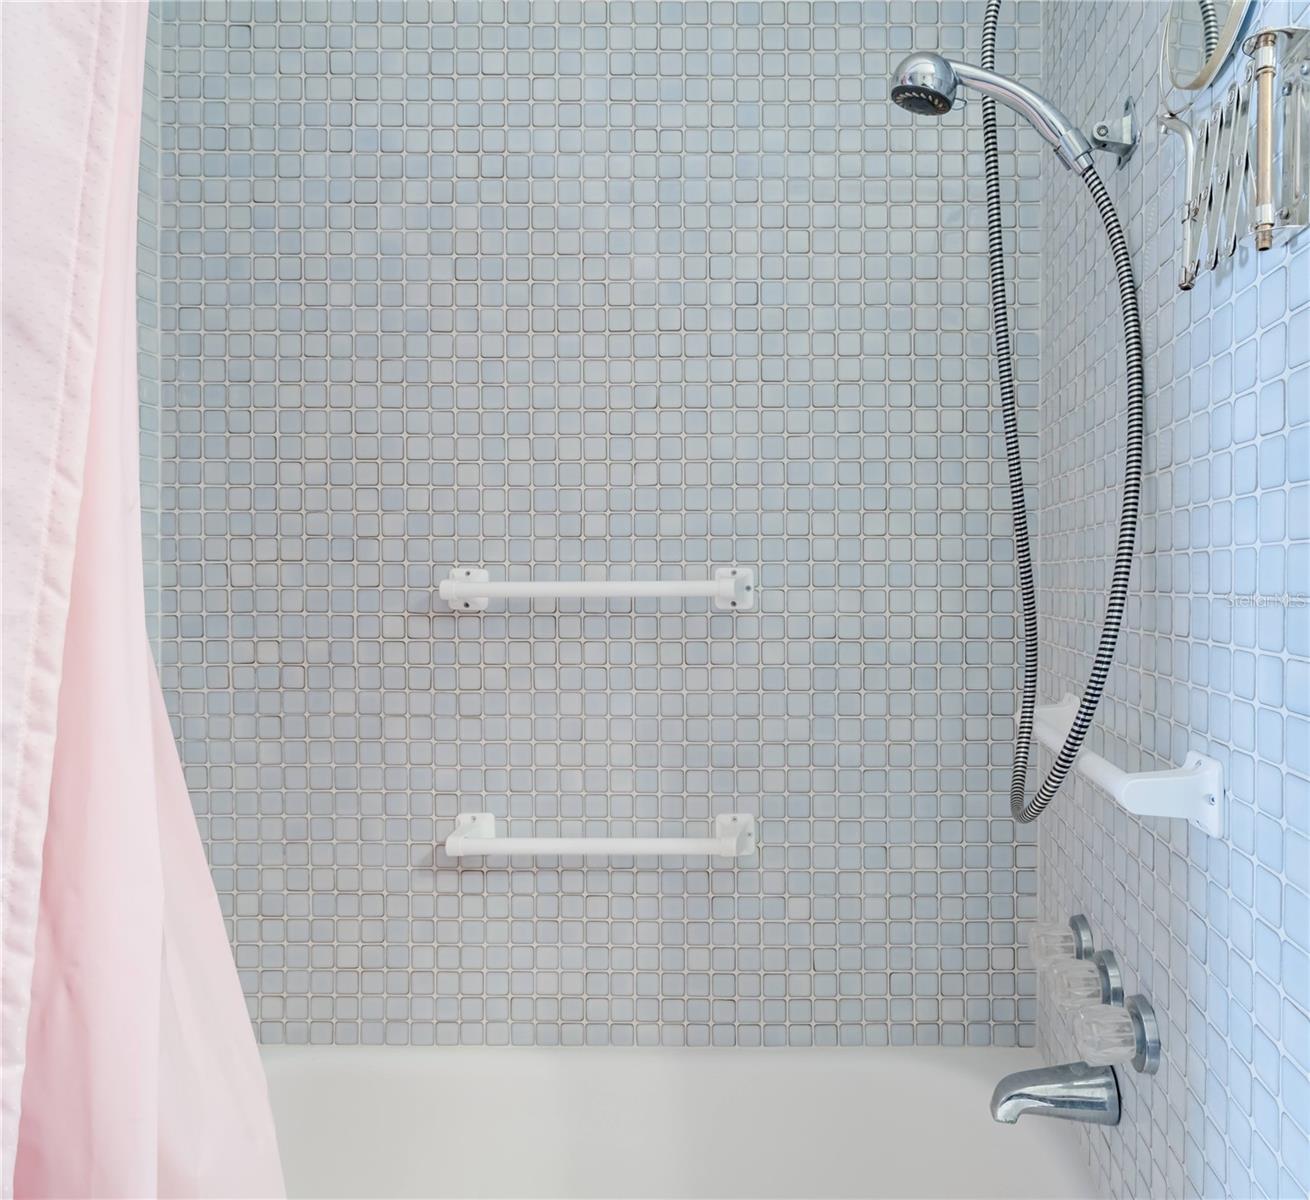 Shower safety handles